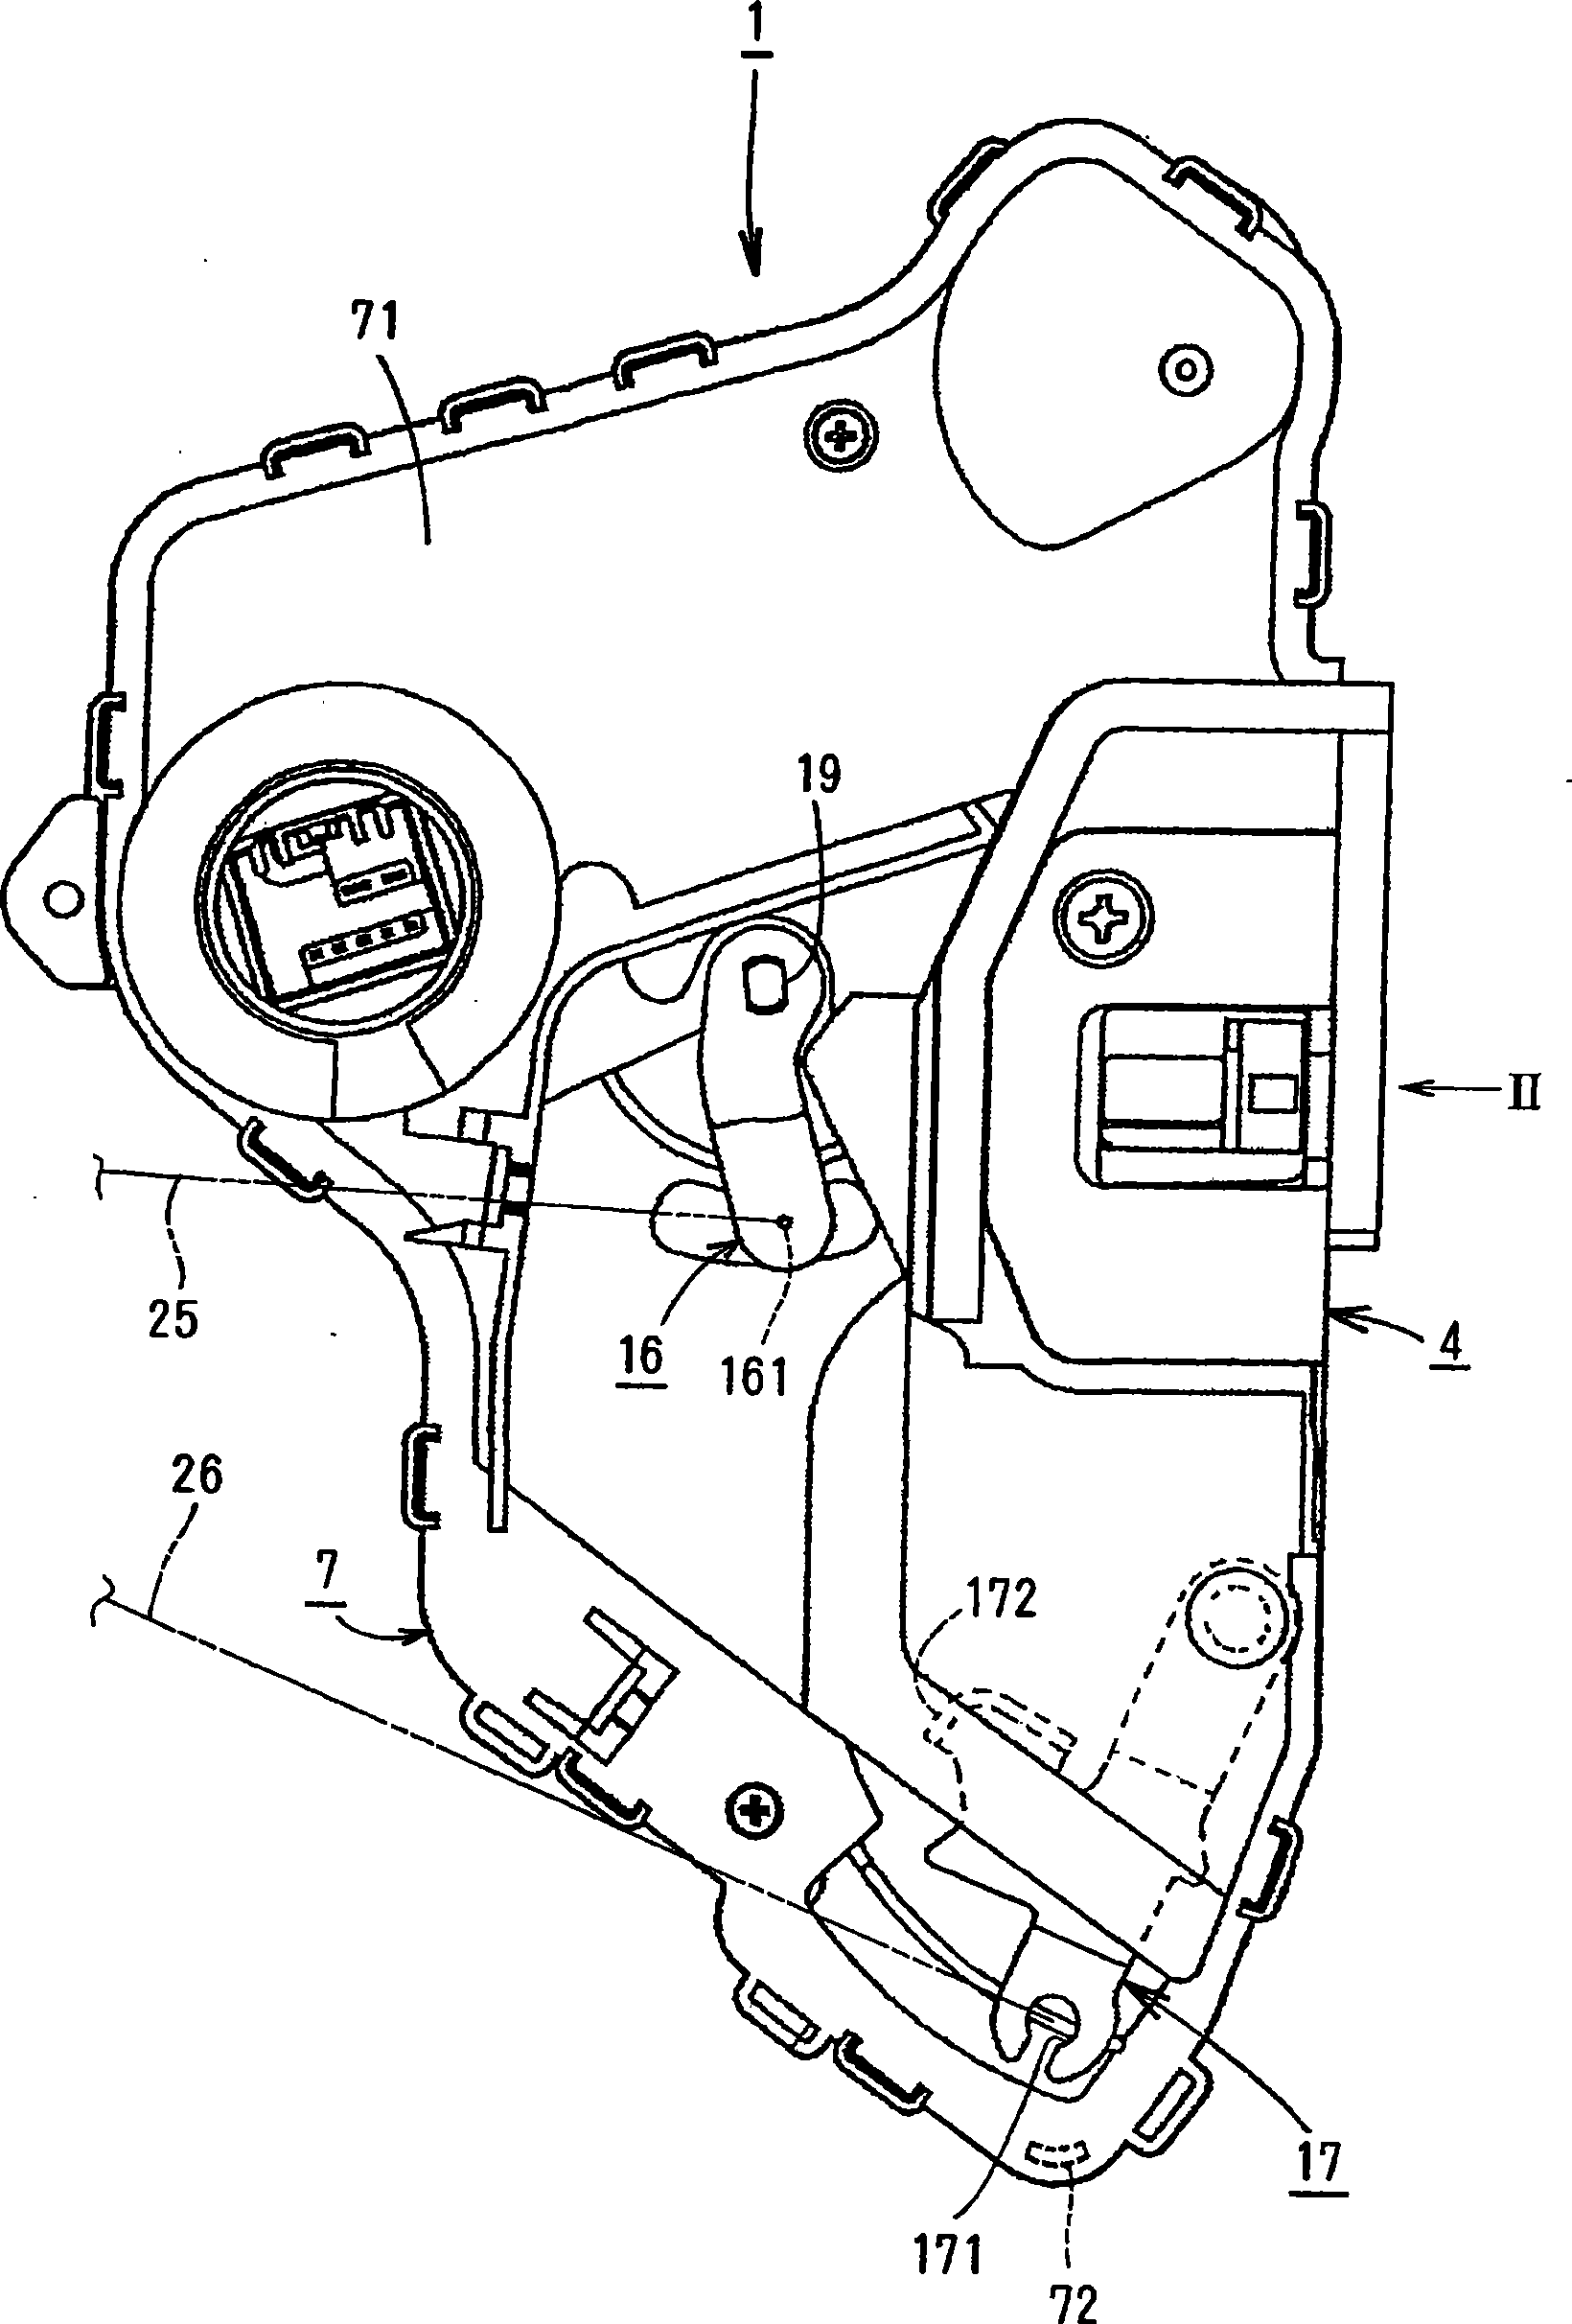 Vehicle door latch apparatus